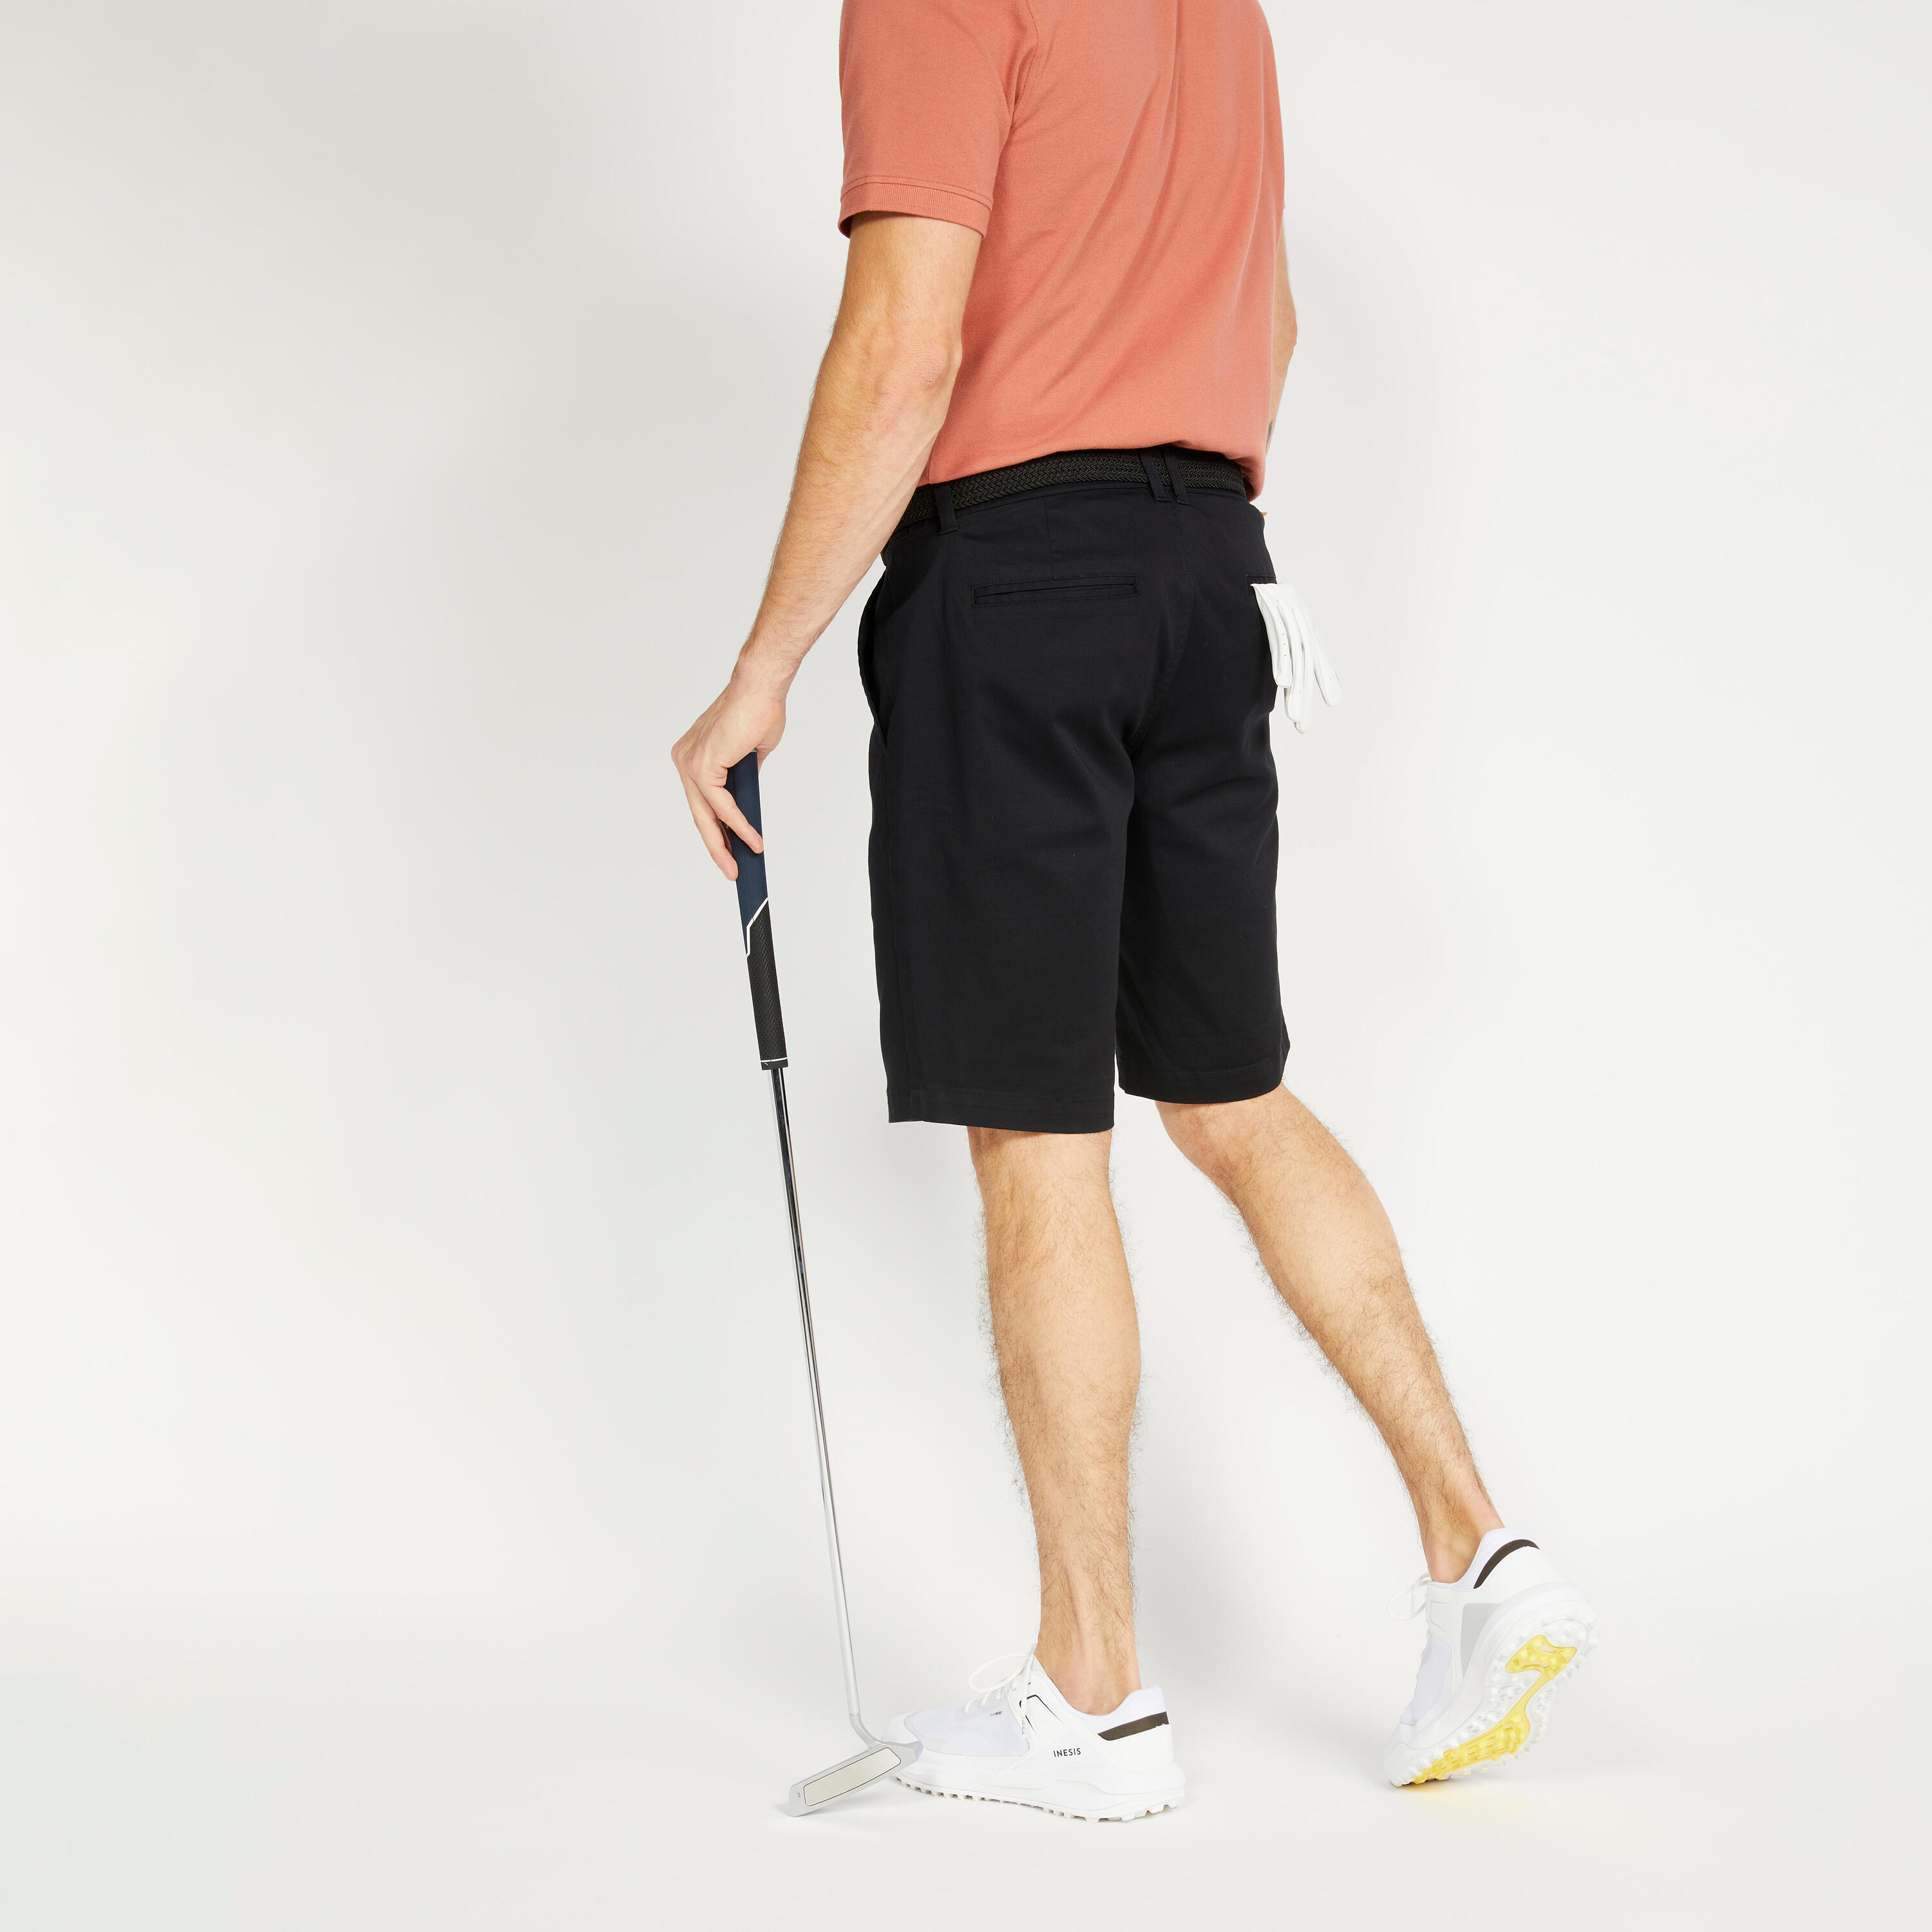 Men's Golf Chino Shorts - MW500 Black 2/6